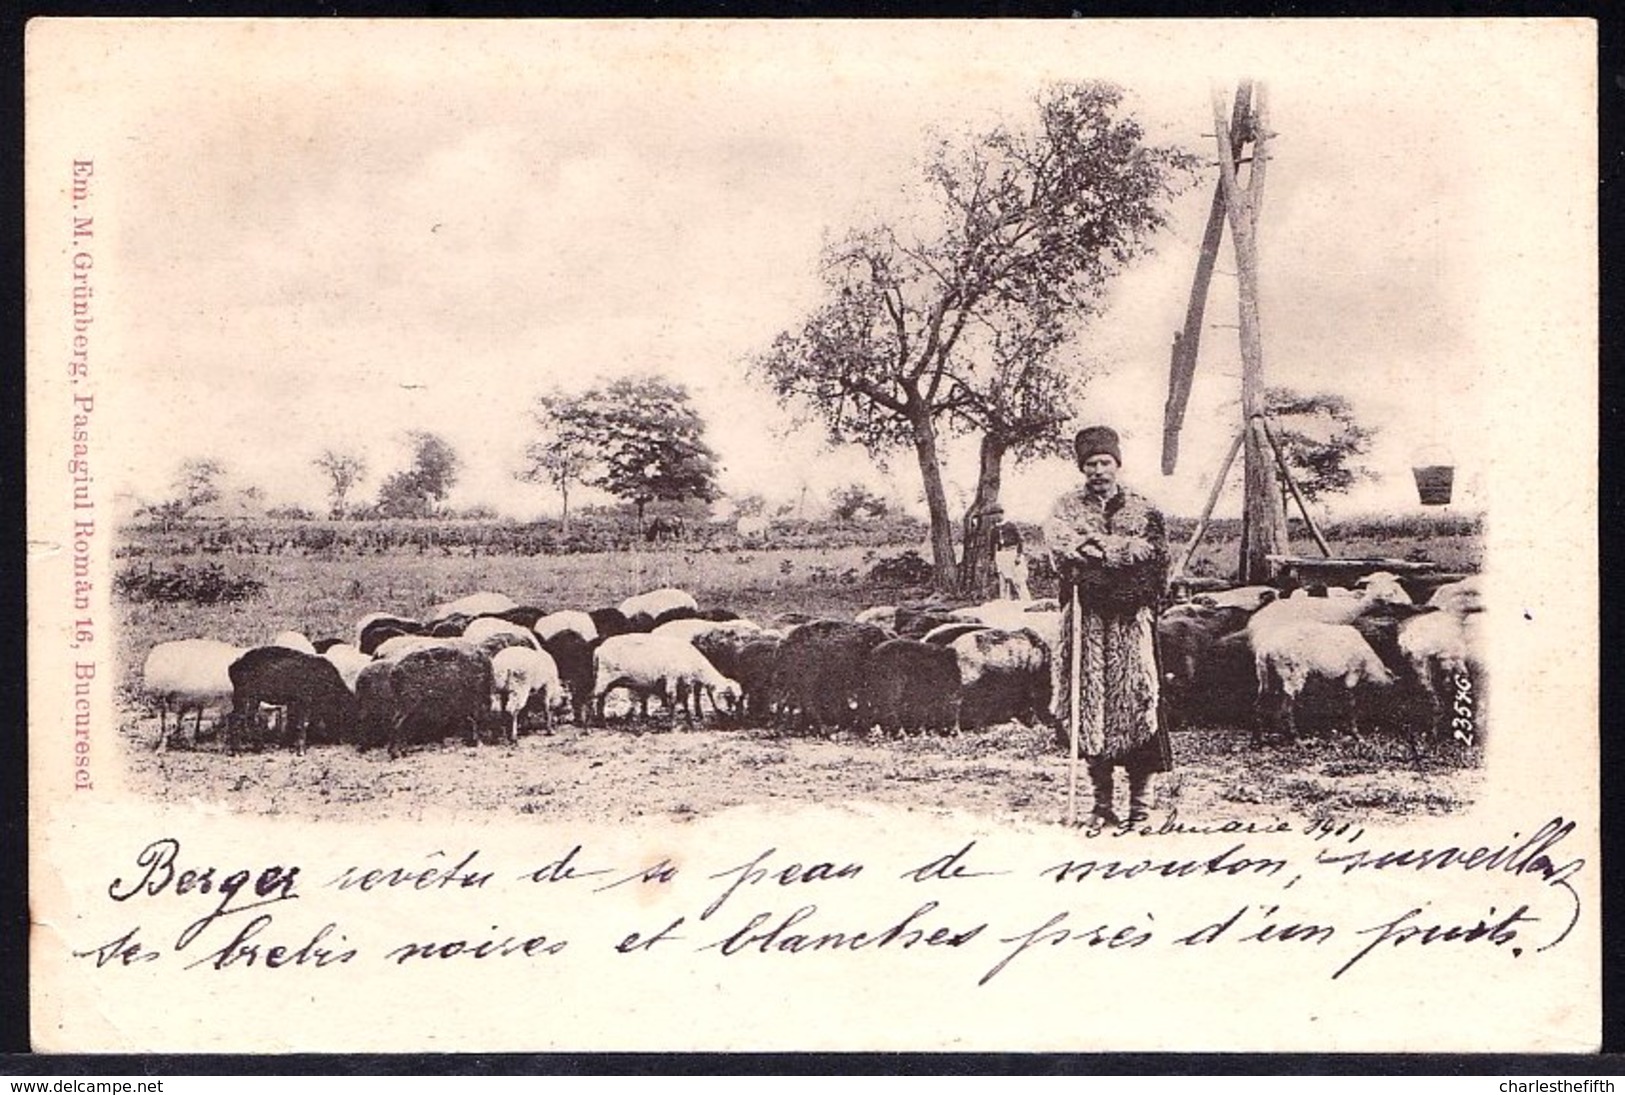 1901 ROMANIAN CPA ** SHEPHERD WITH SHEEP - BERGER AVEC MOUTON ** édit. Em. M. Grünberg - Bucuresci - Romania